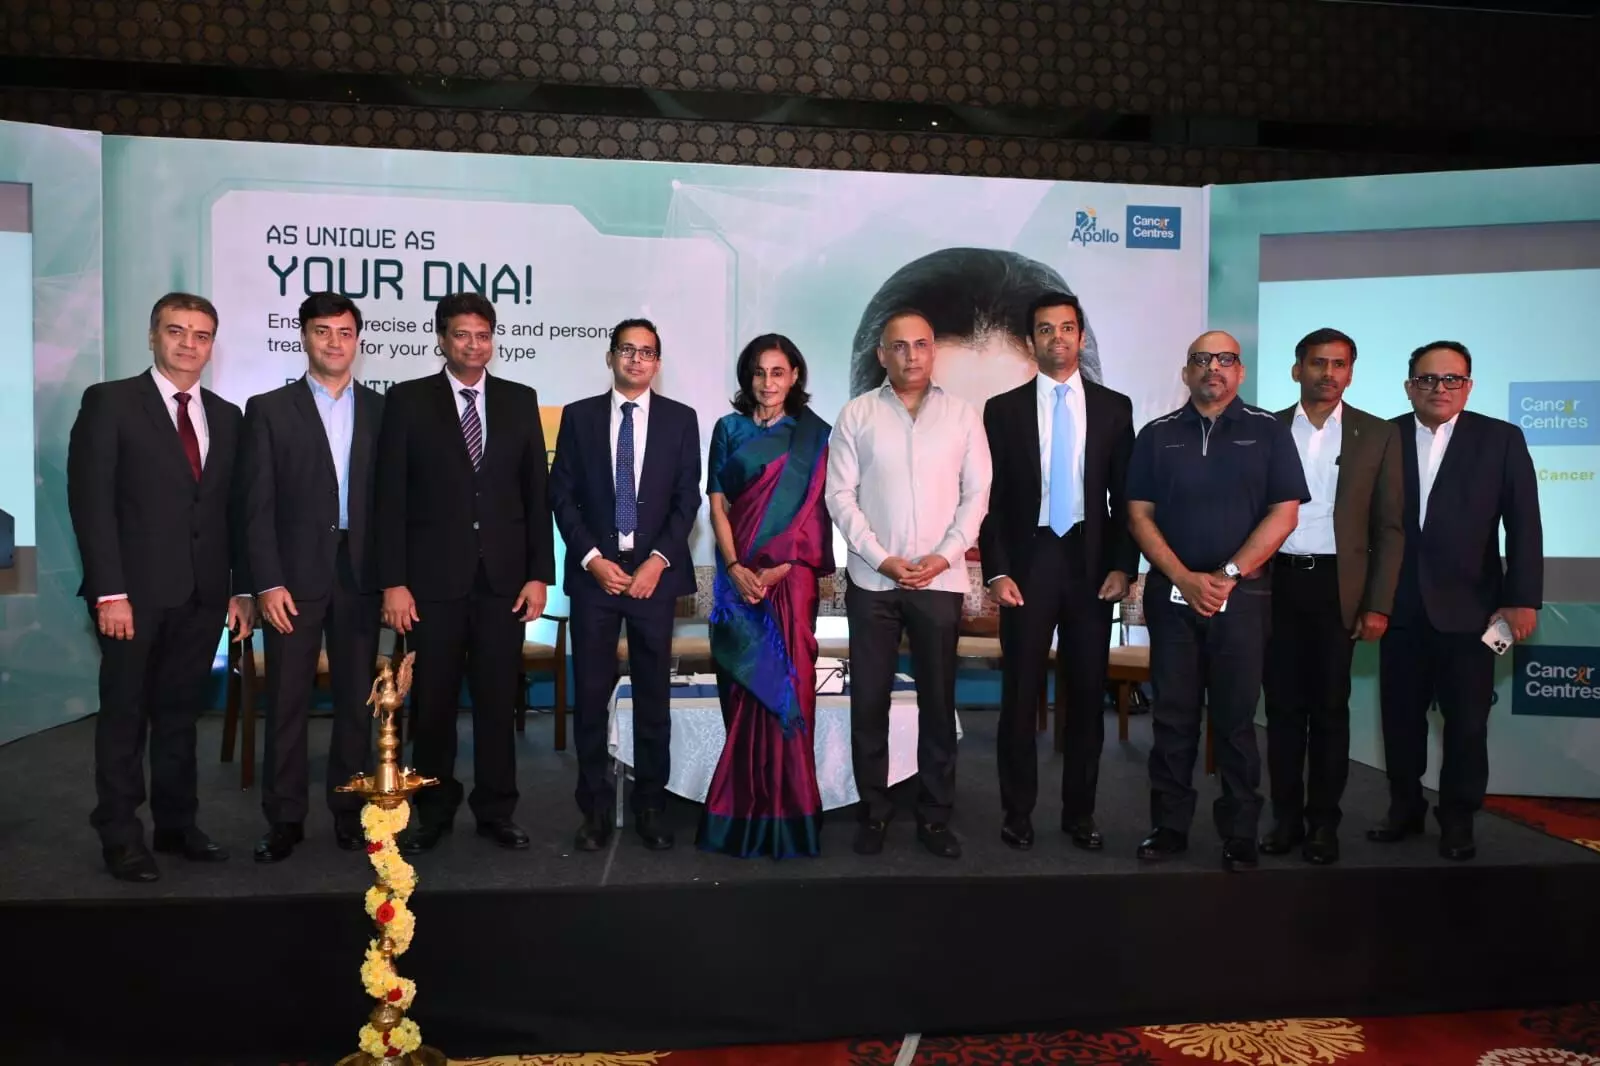 Apollo Cancer Centres launches India’s 1st AI-Precision Oncology Centre